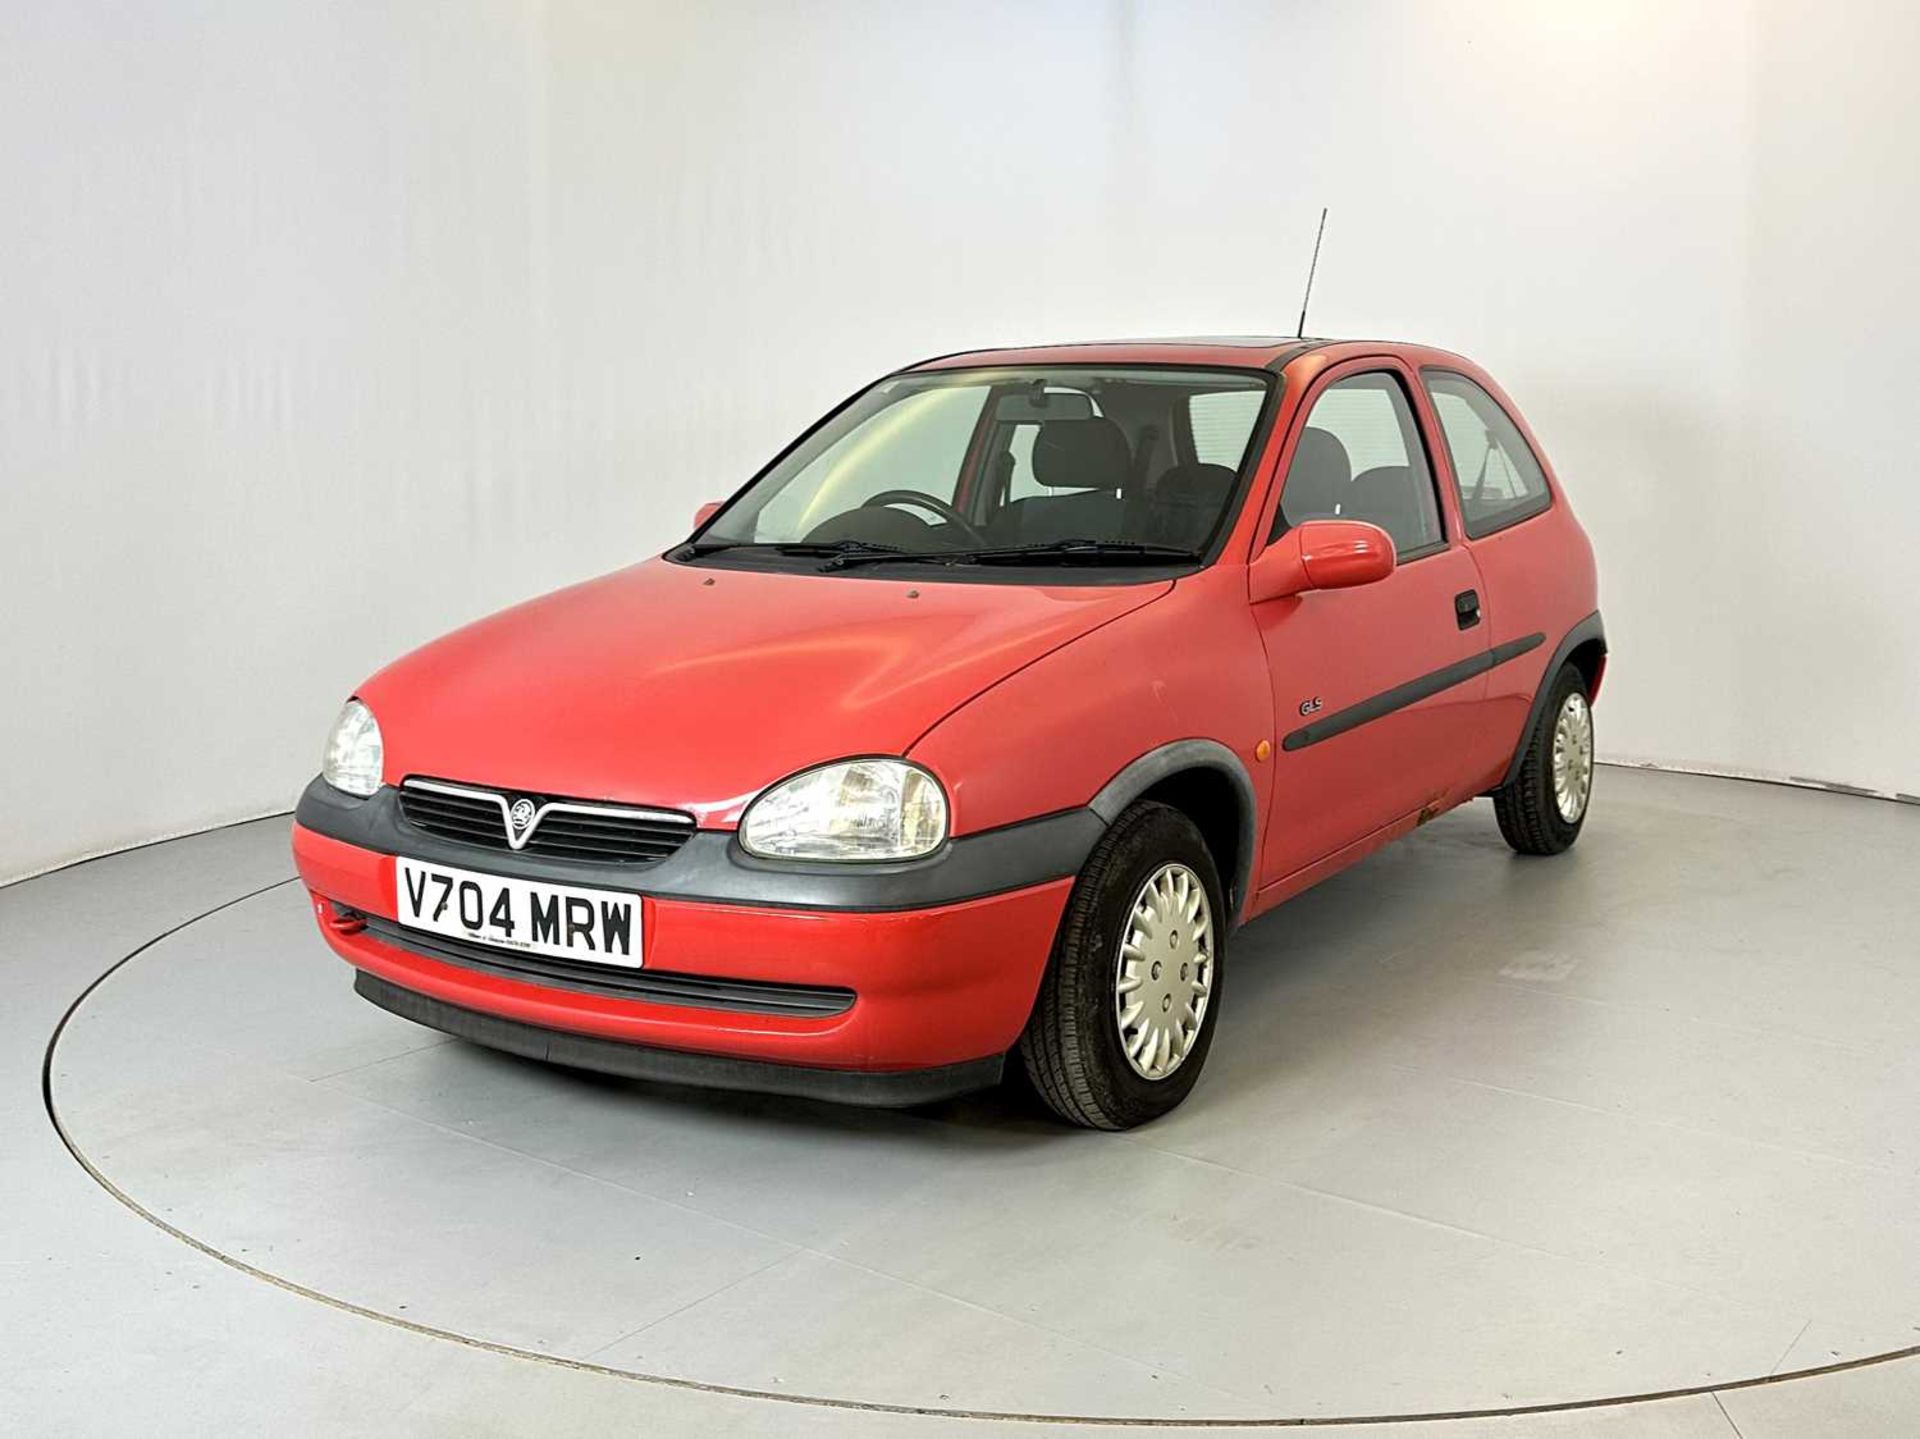 1999 Vauxhall Corsa - Image 3 of 29